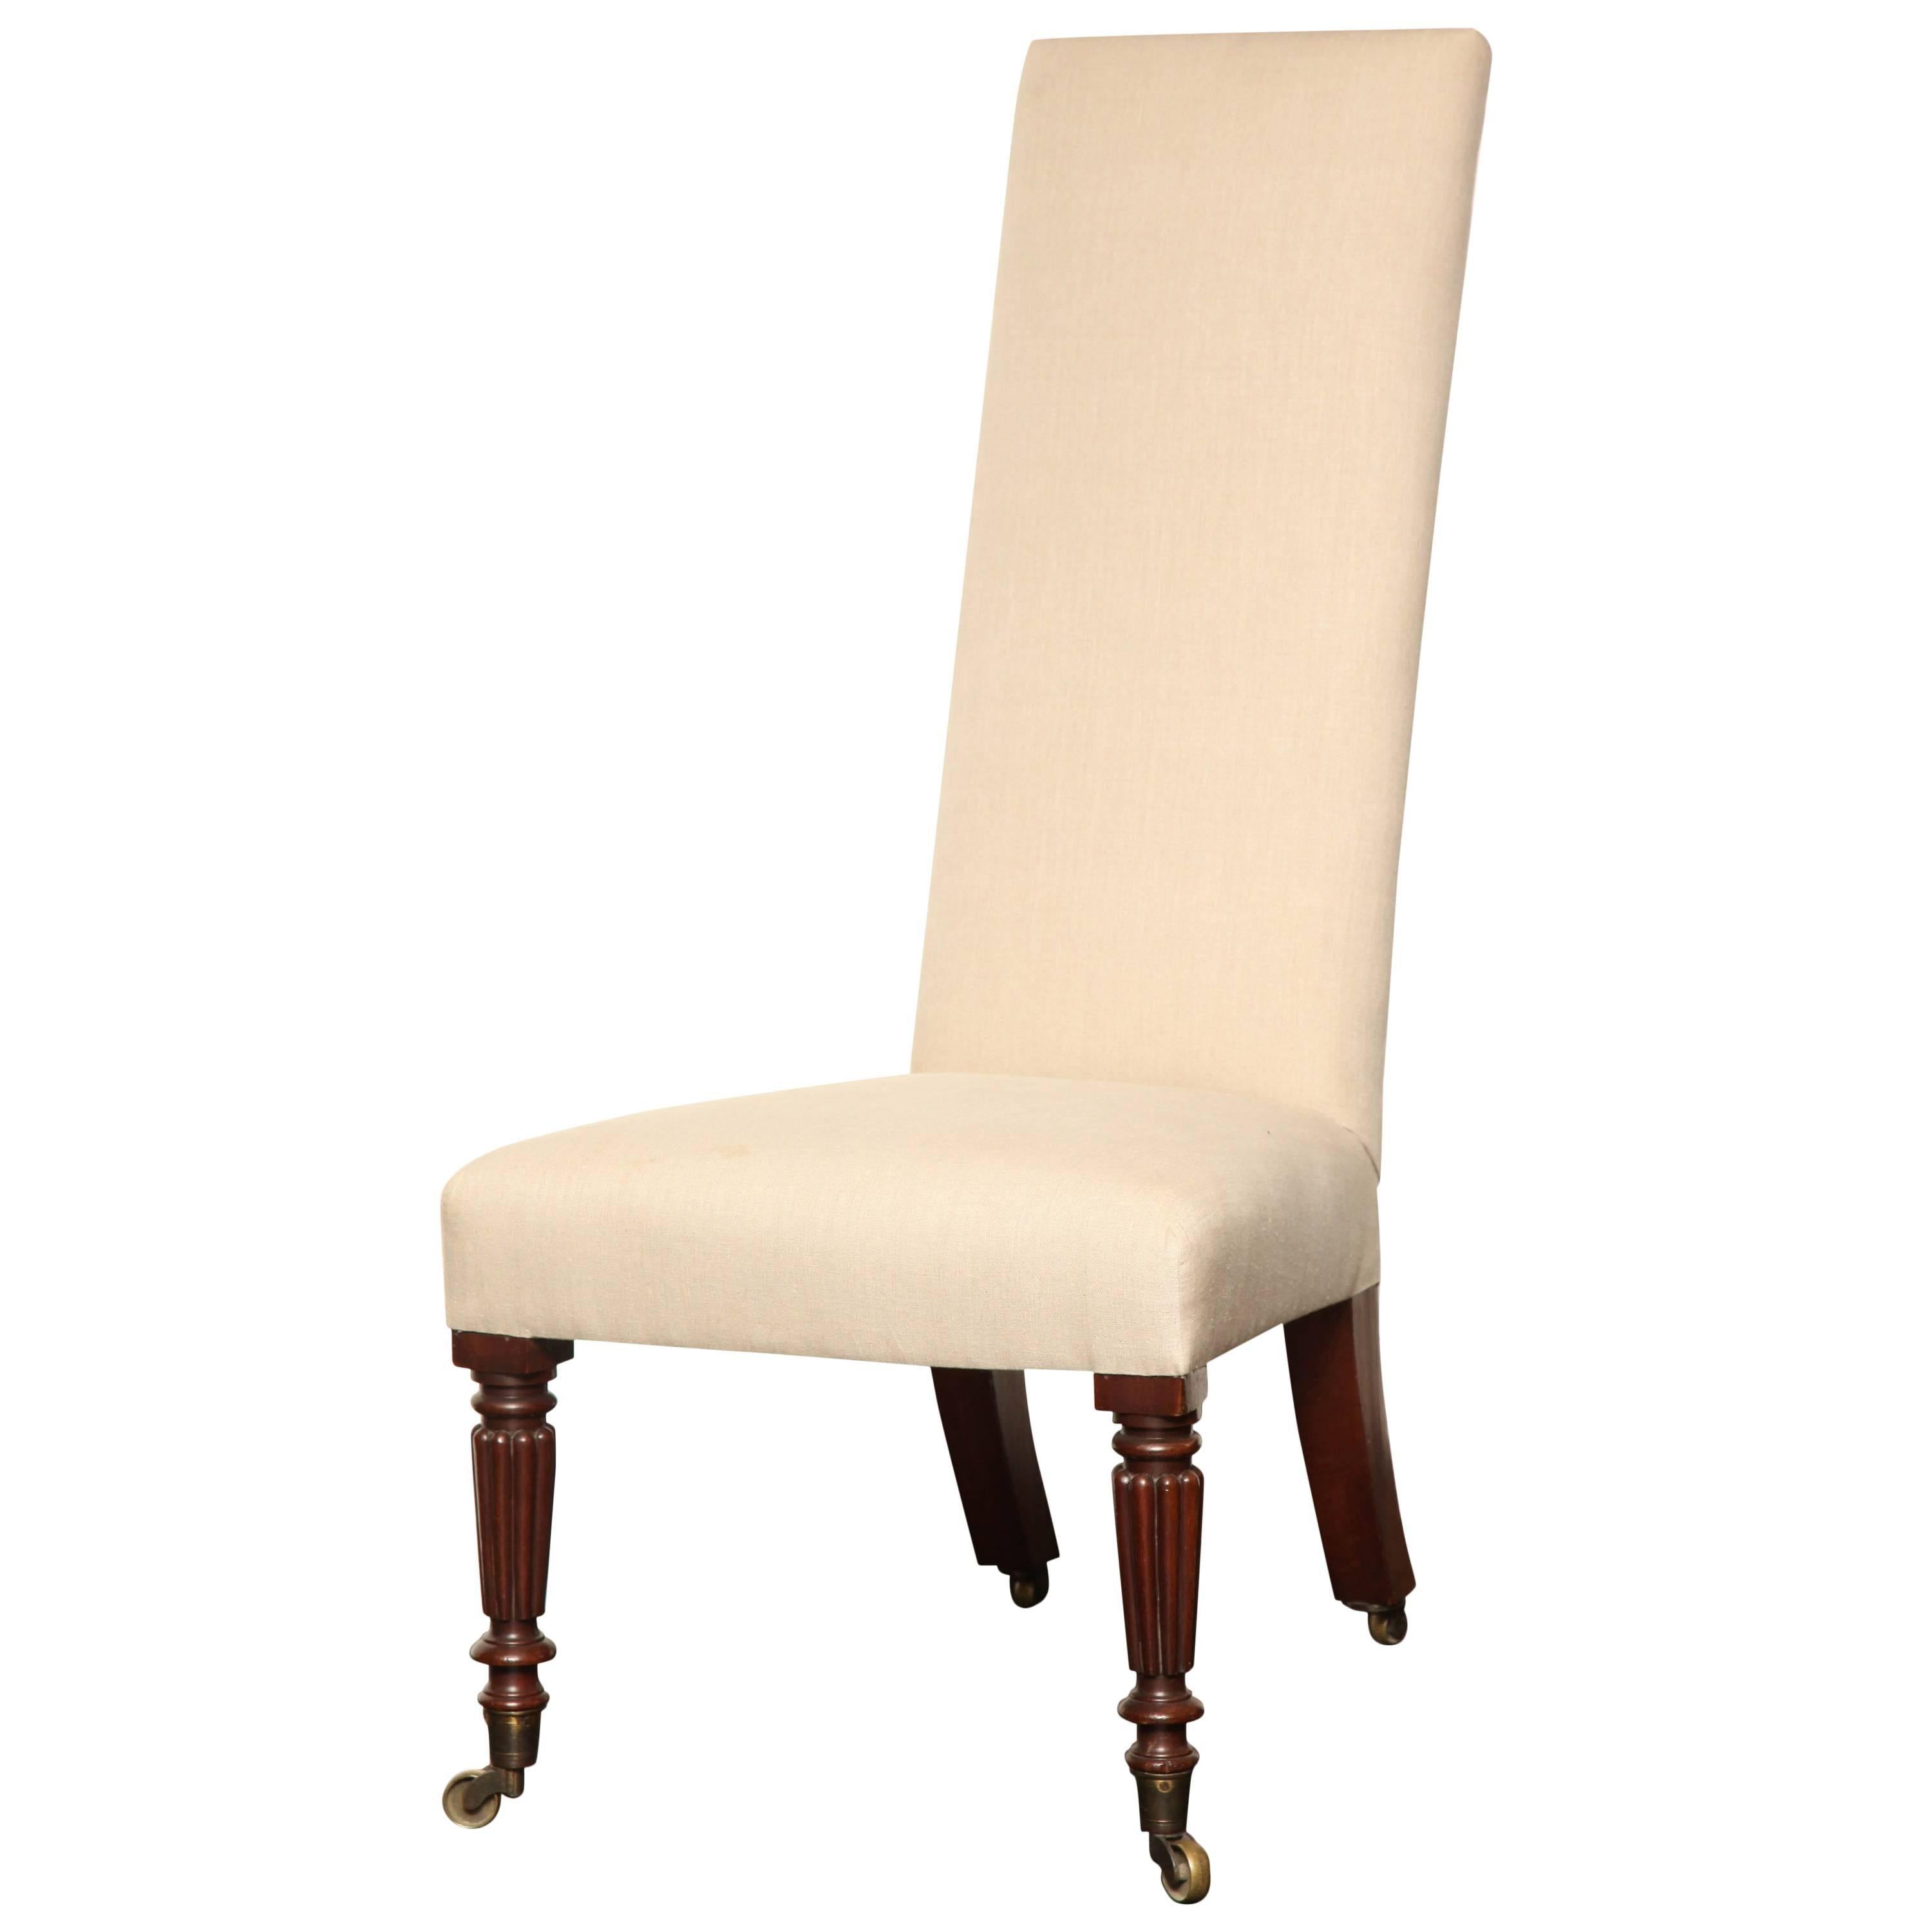 Mid-19th Century English Mahogany High Back Chair